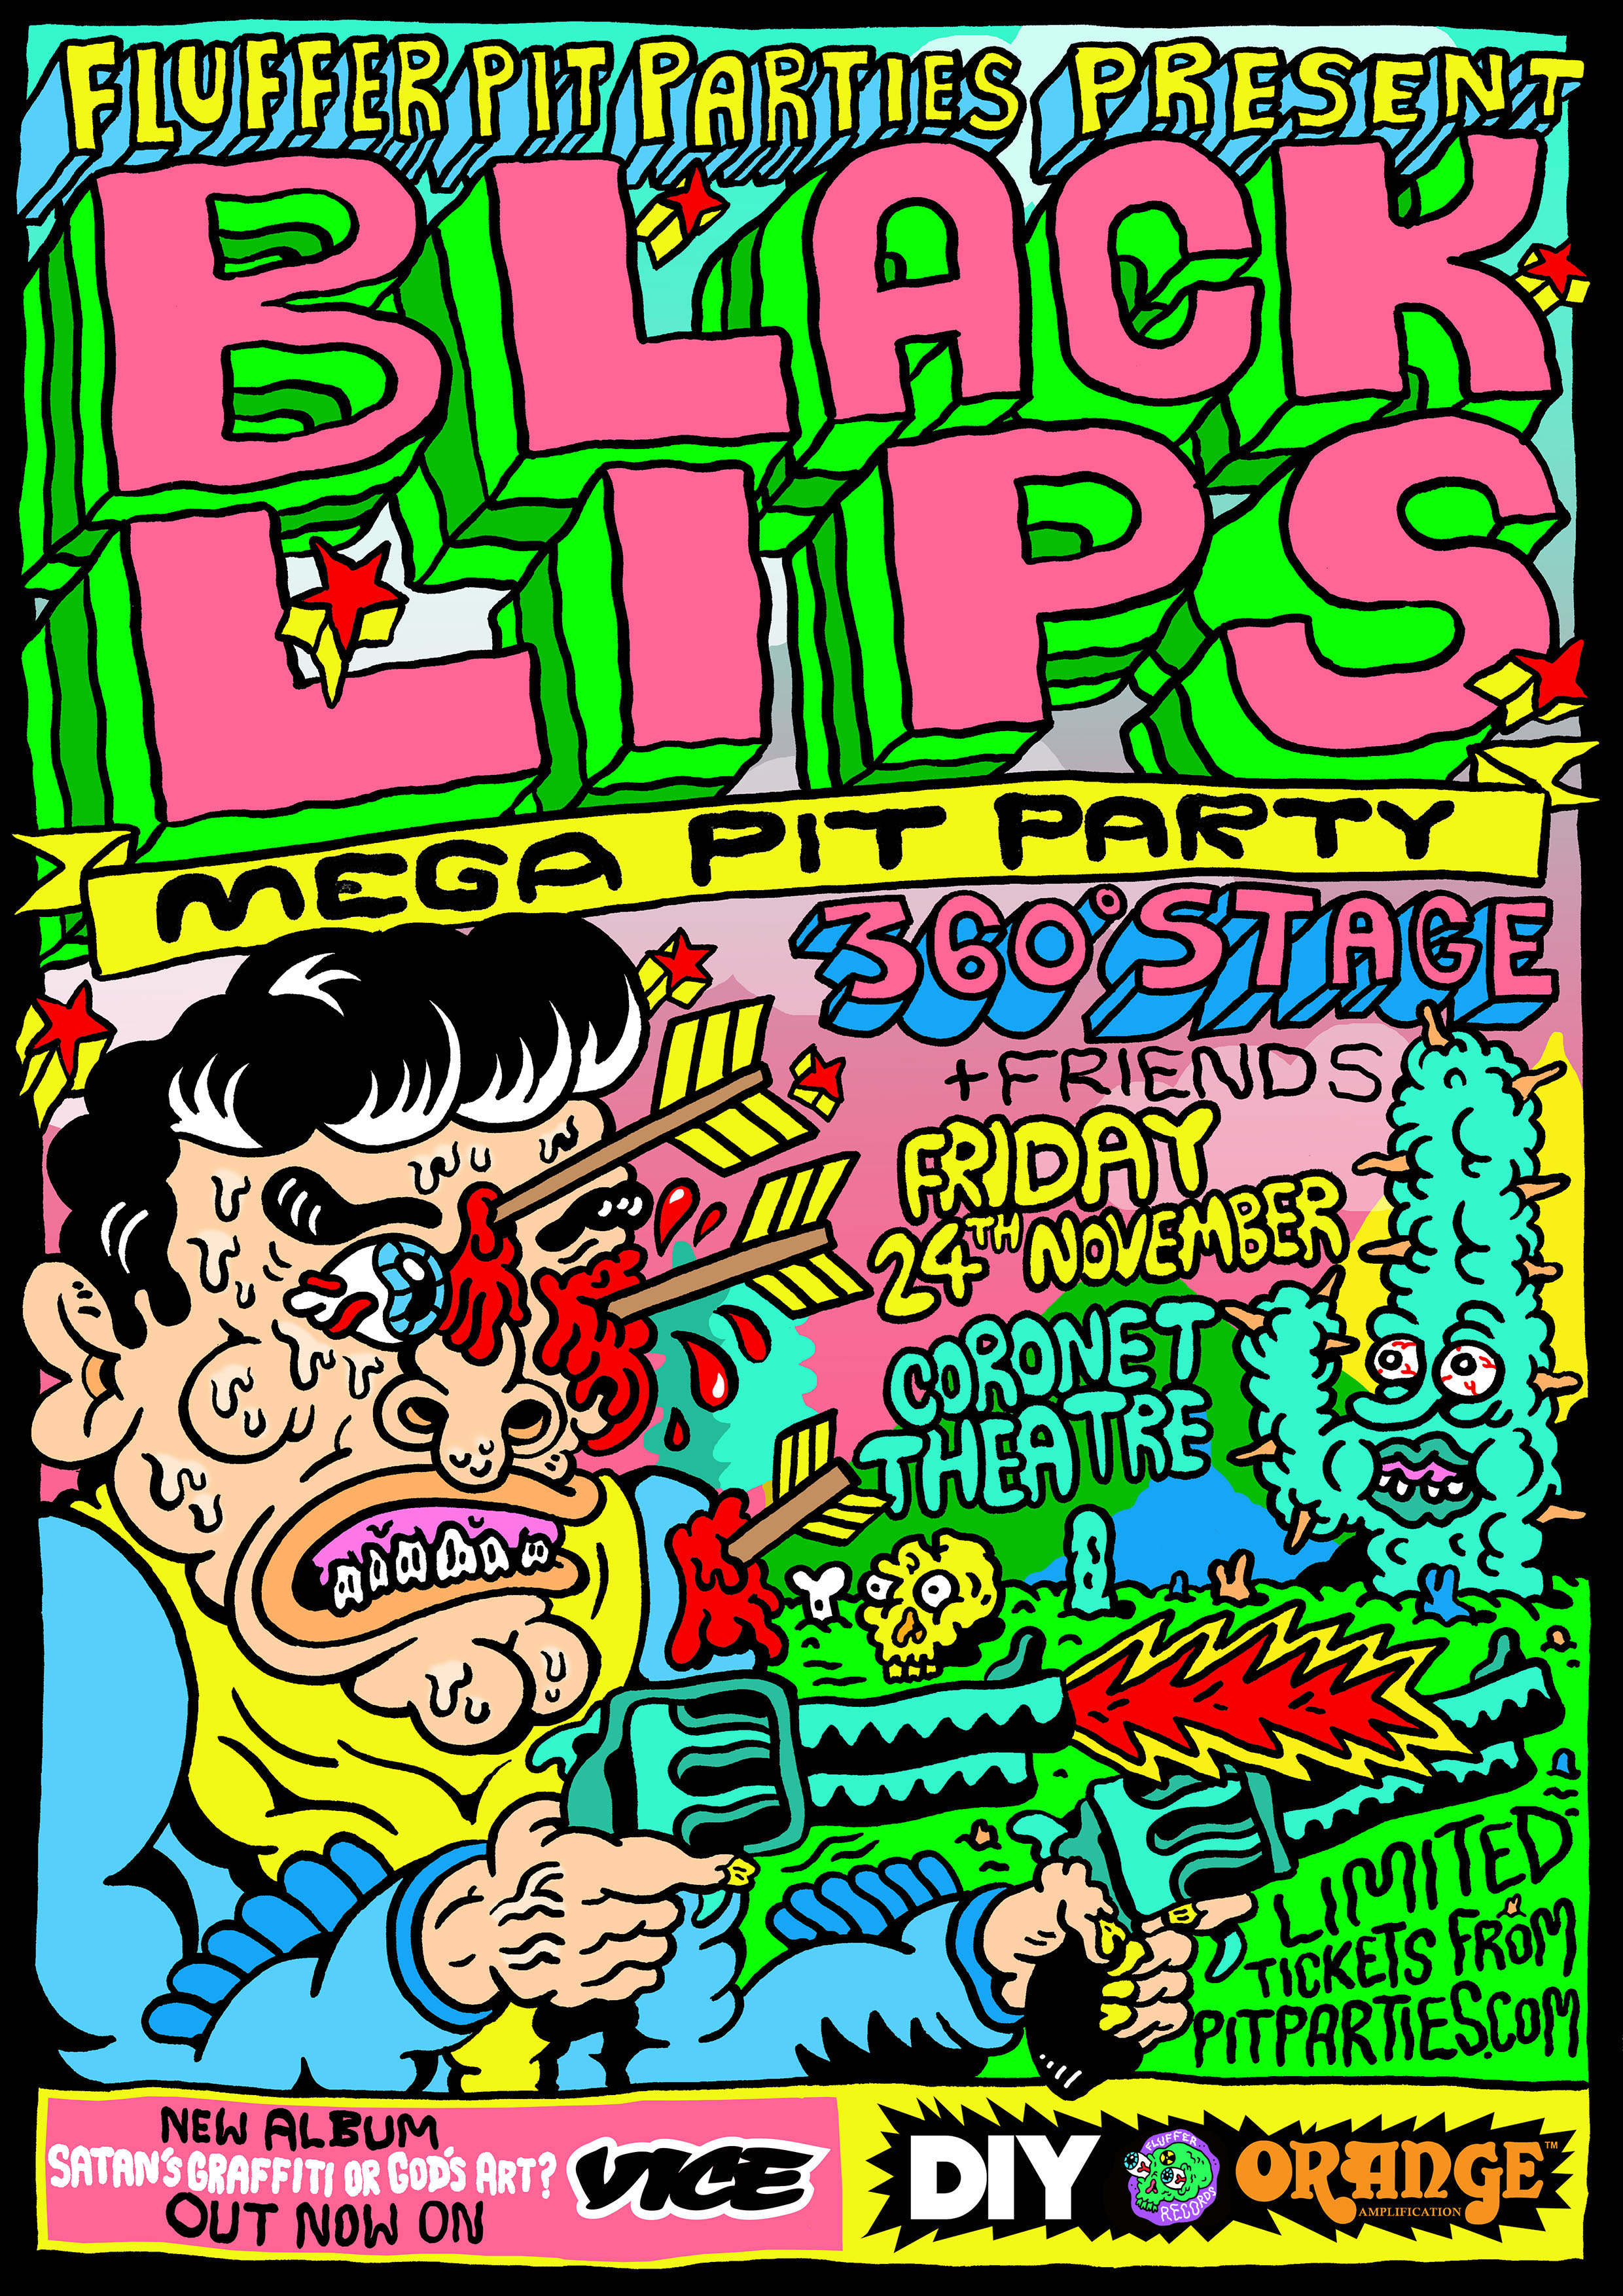 Black Lips announce massive Fluffer Pit Party!